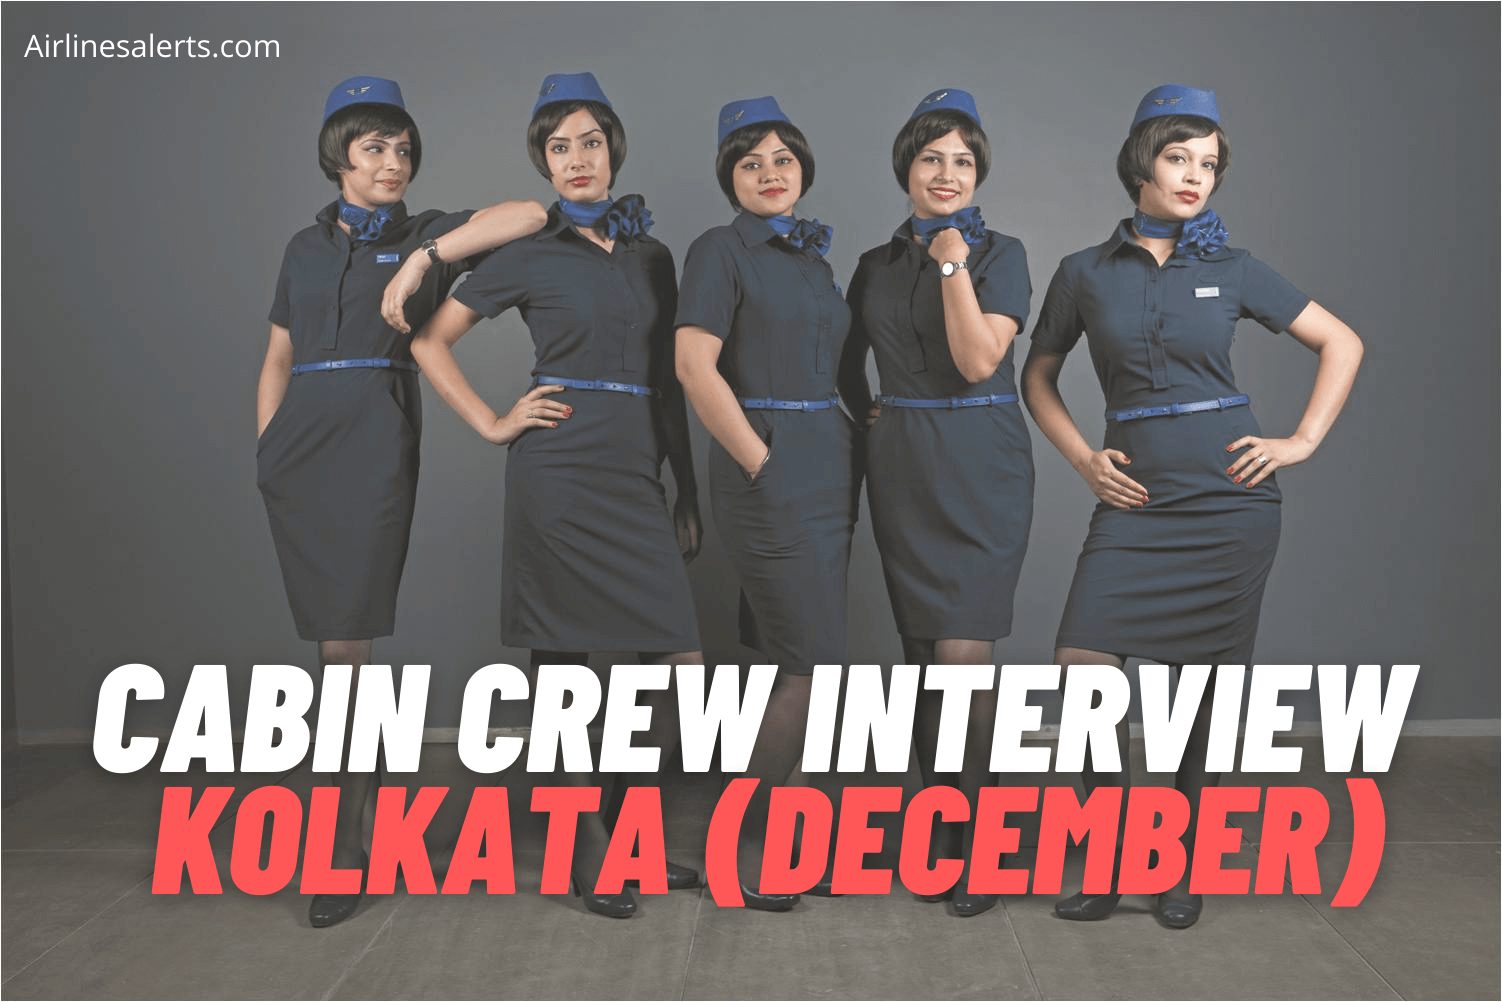 Indigo Cabin Crew Recruitment Kolkata Interview - Check Details & APPLY 